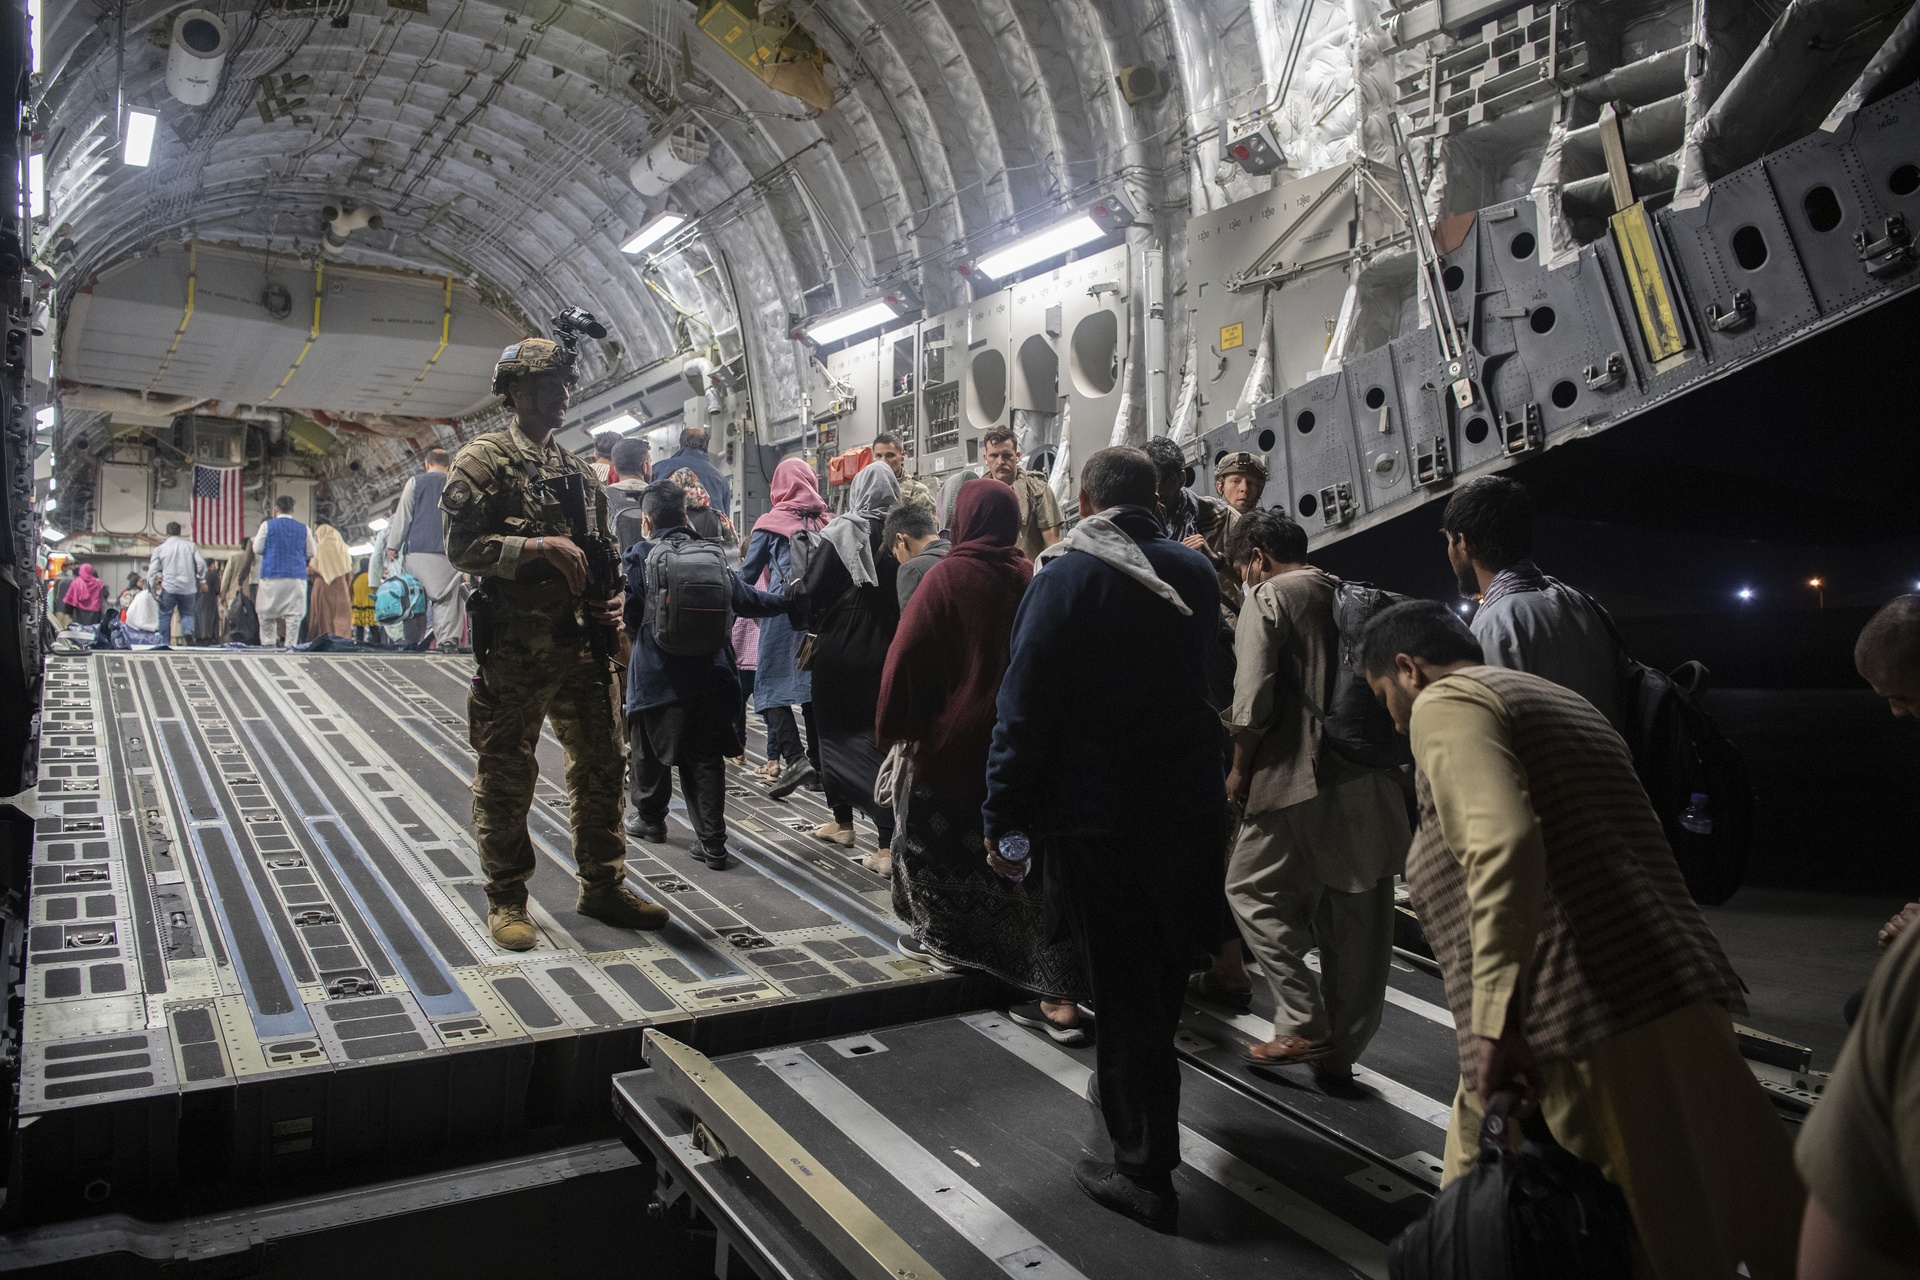 Afghan passengers board a U.S. Air Force C-17 Globemaster III during the Afghanistan evacuation at Hamid Karzai International Airport in Kabul.